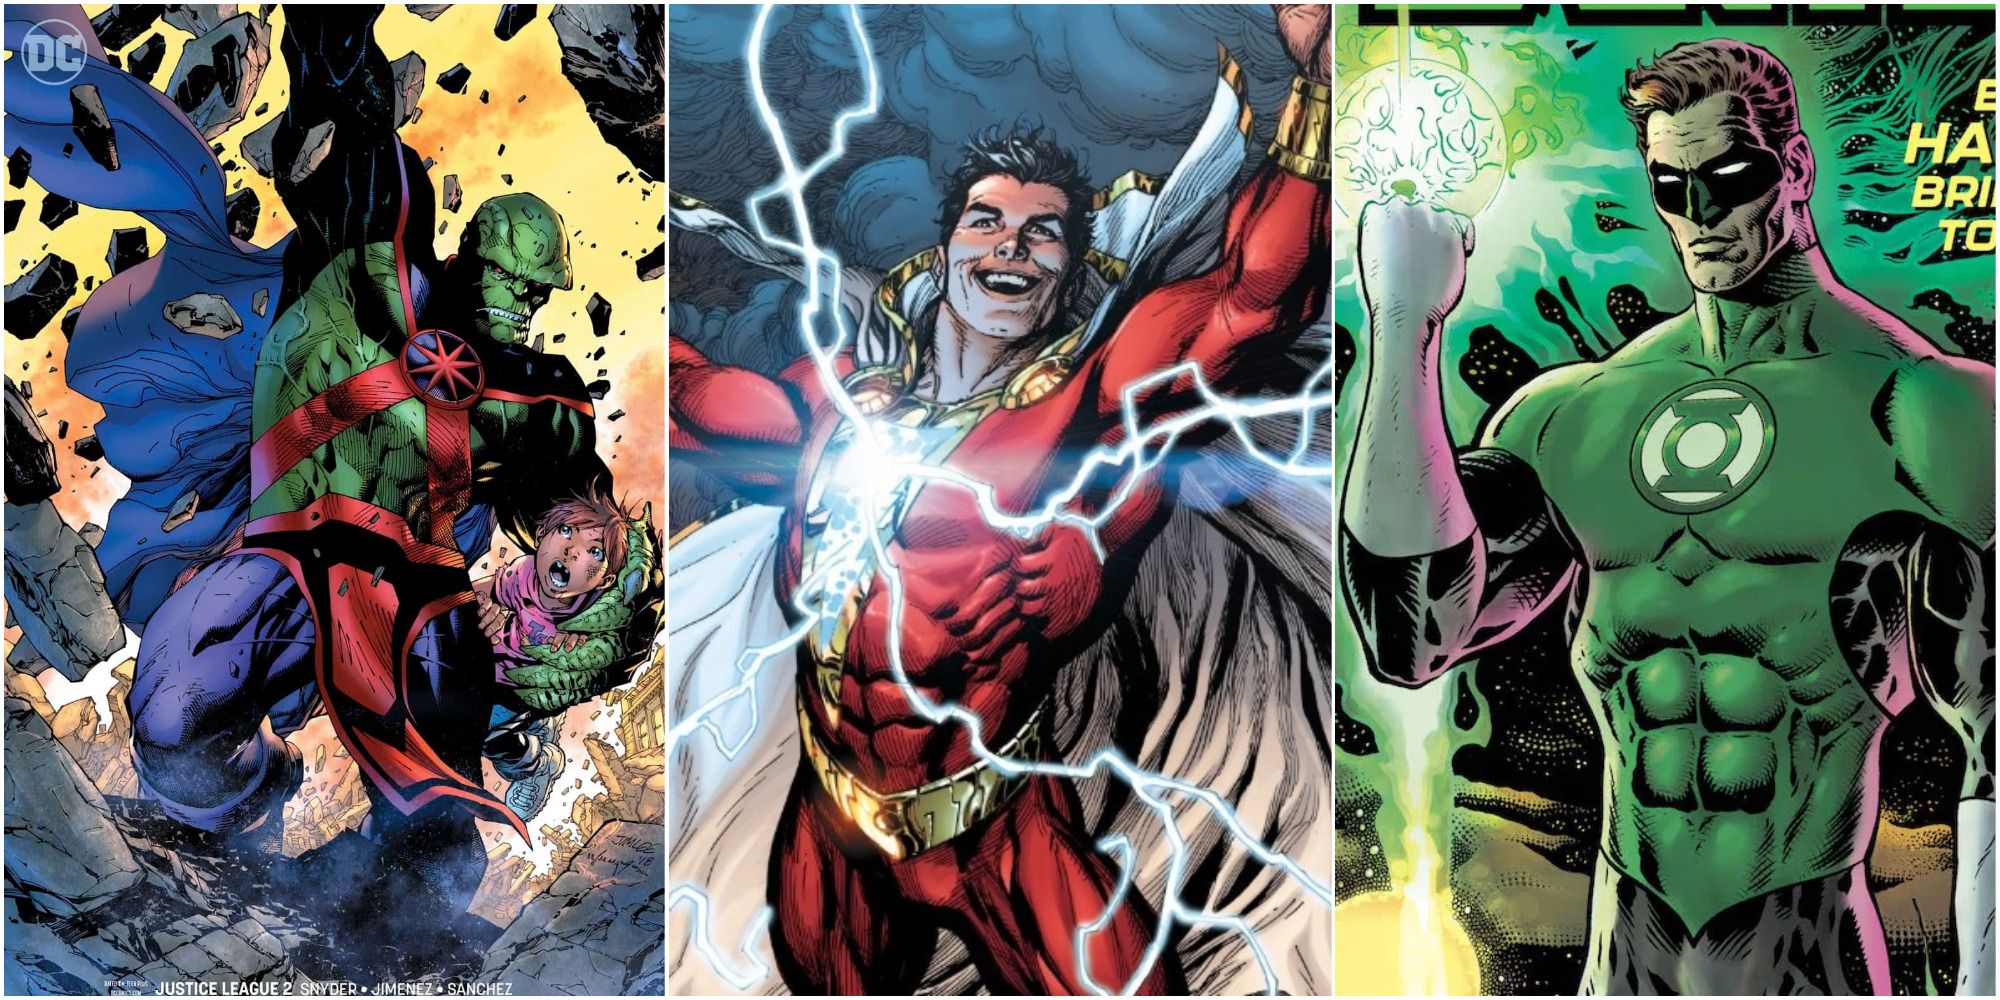 Martian Manhunter, Shazam, and Green Lantern